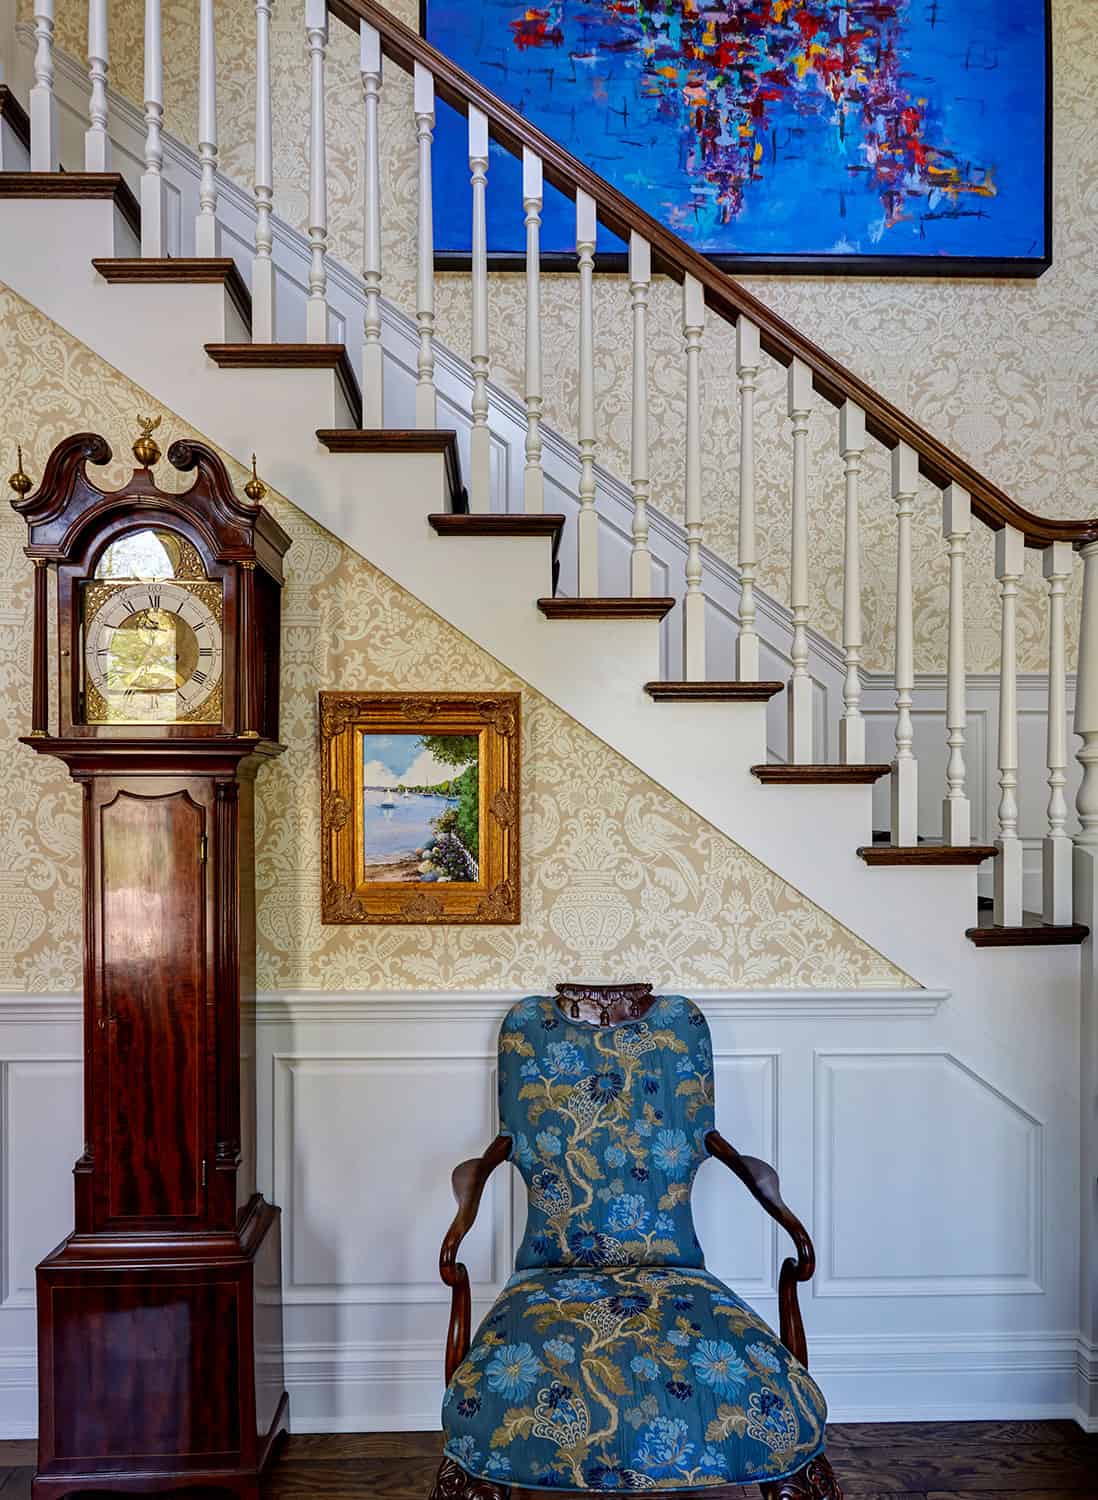 staircase-vignette-antique-grandfather-clock-blue-artwork